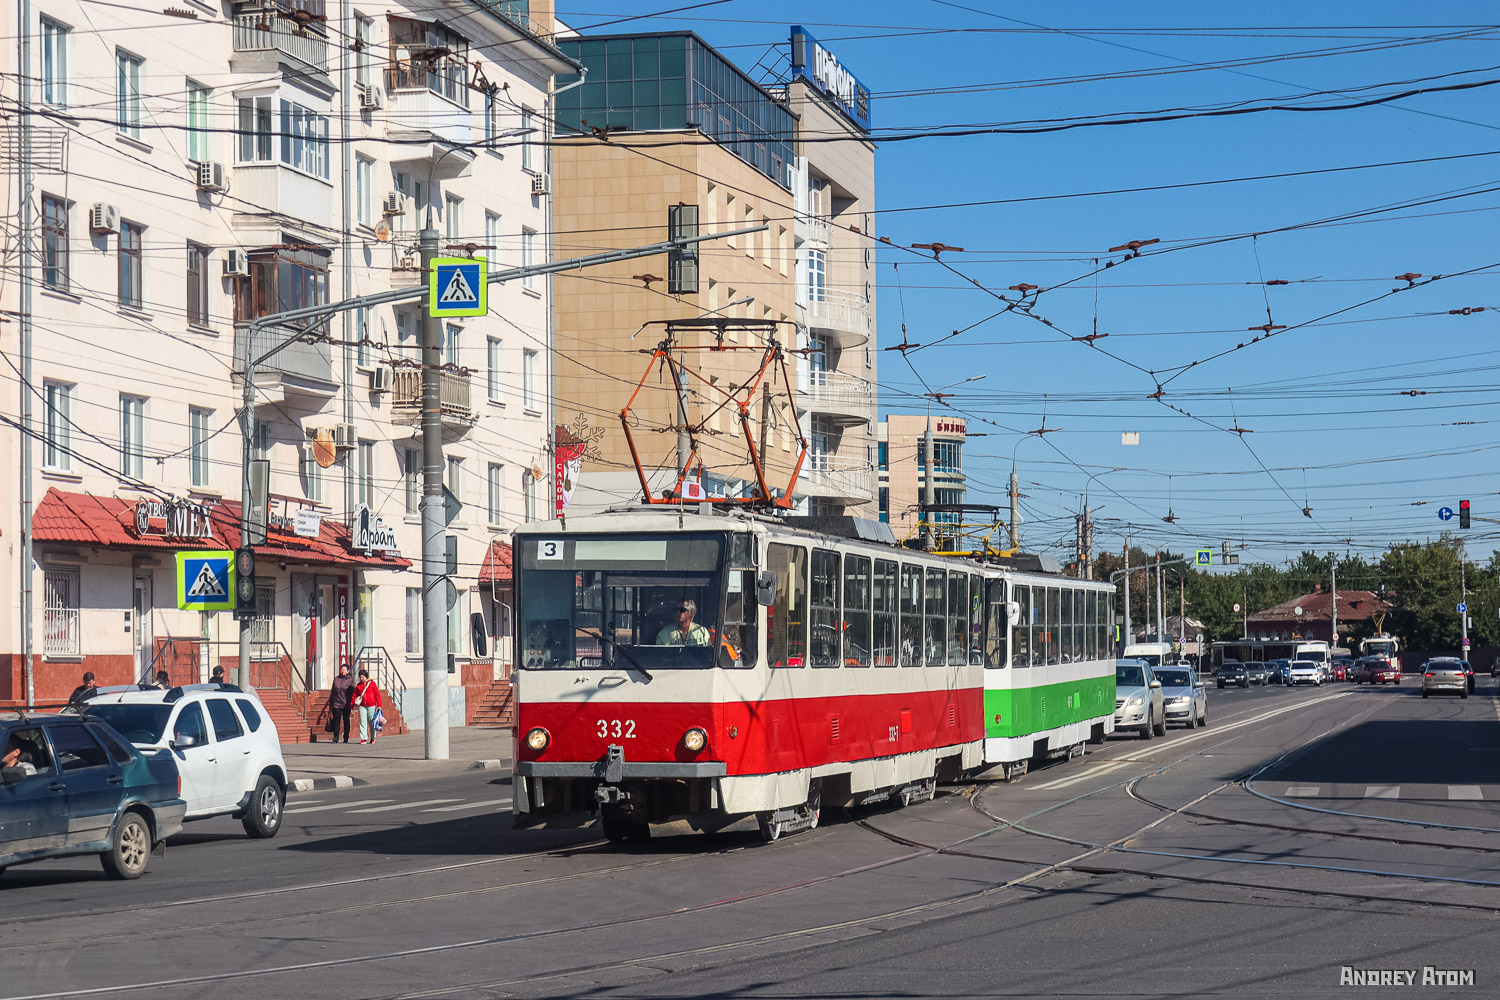 Тула, Tatra T6B5SU № 332; Тула — Выставка трамваев "95 лет на службе городу" 10 сентября 2022 г.